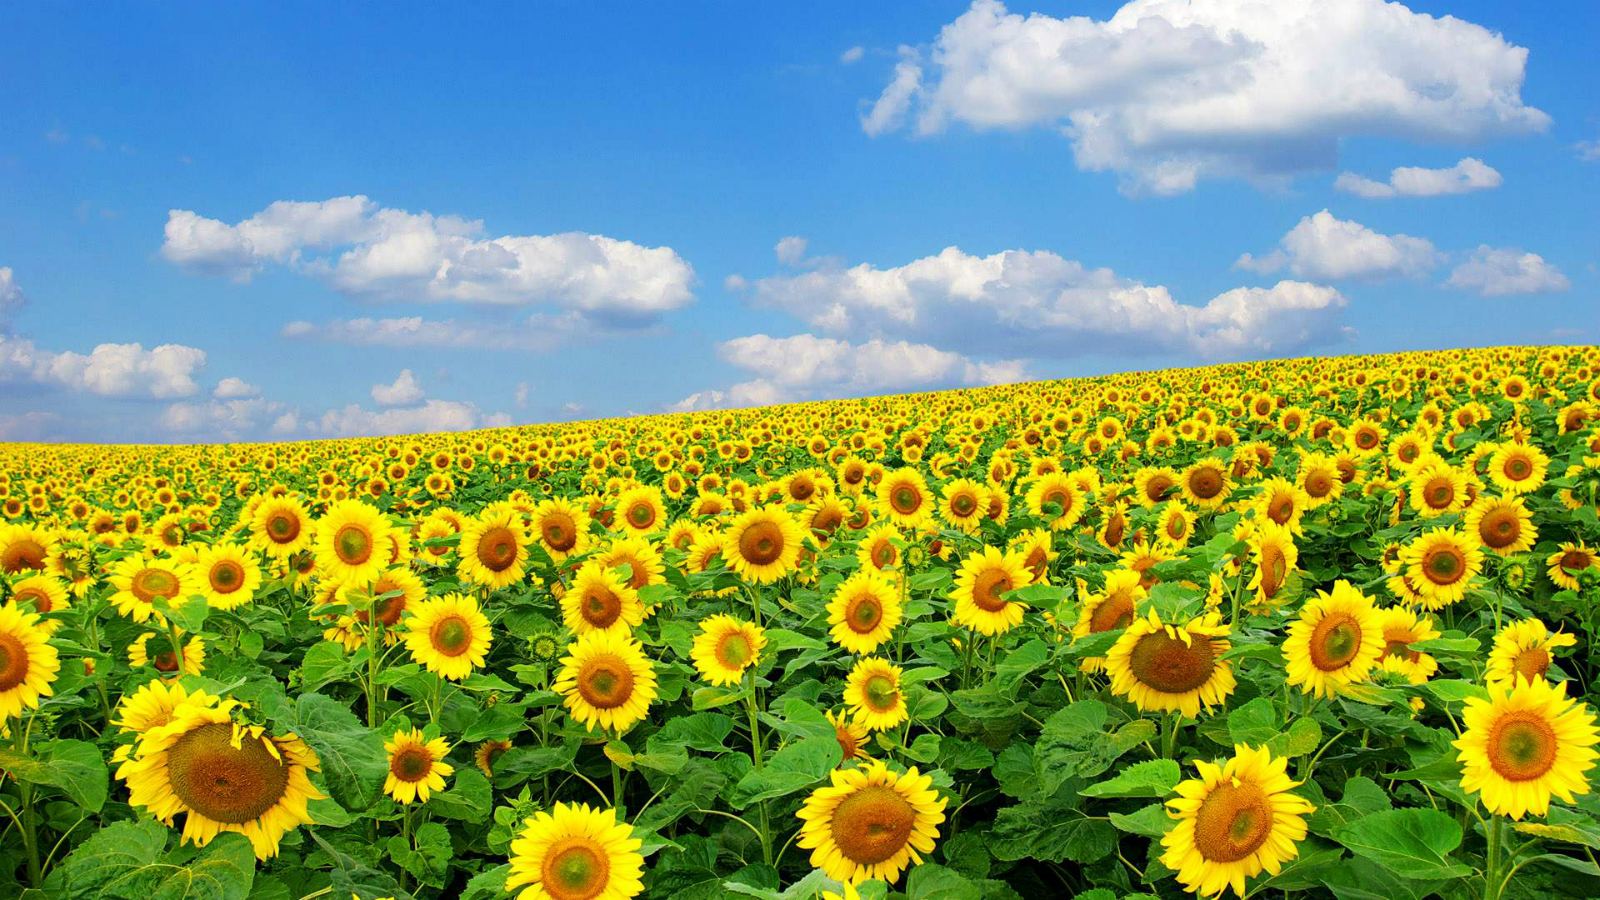 Summer Sunflowers, High Definition, High Quality